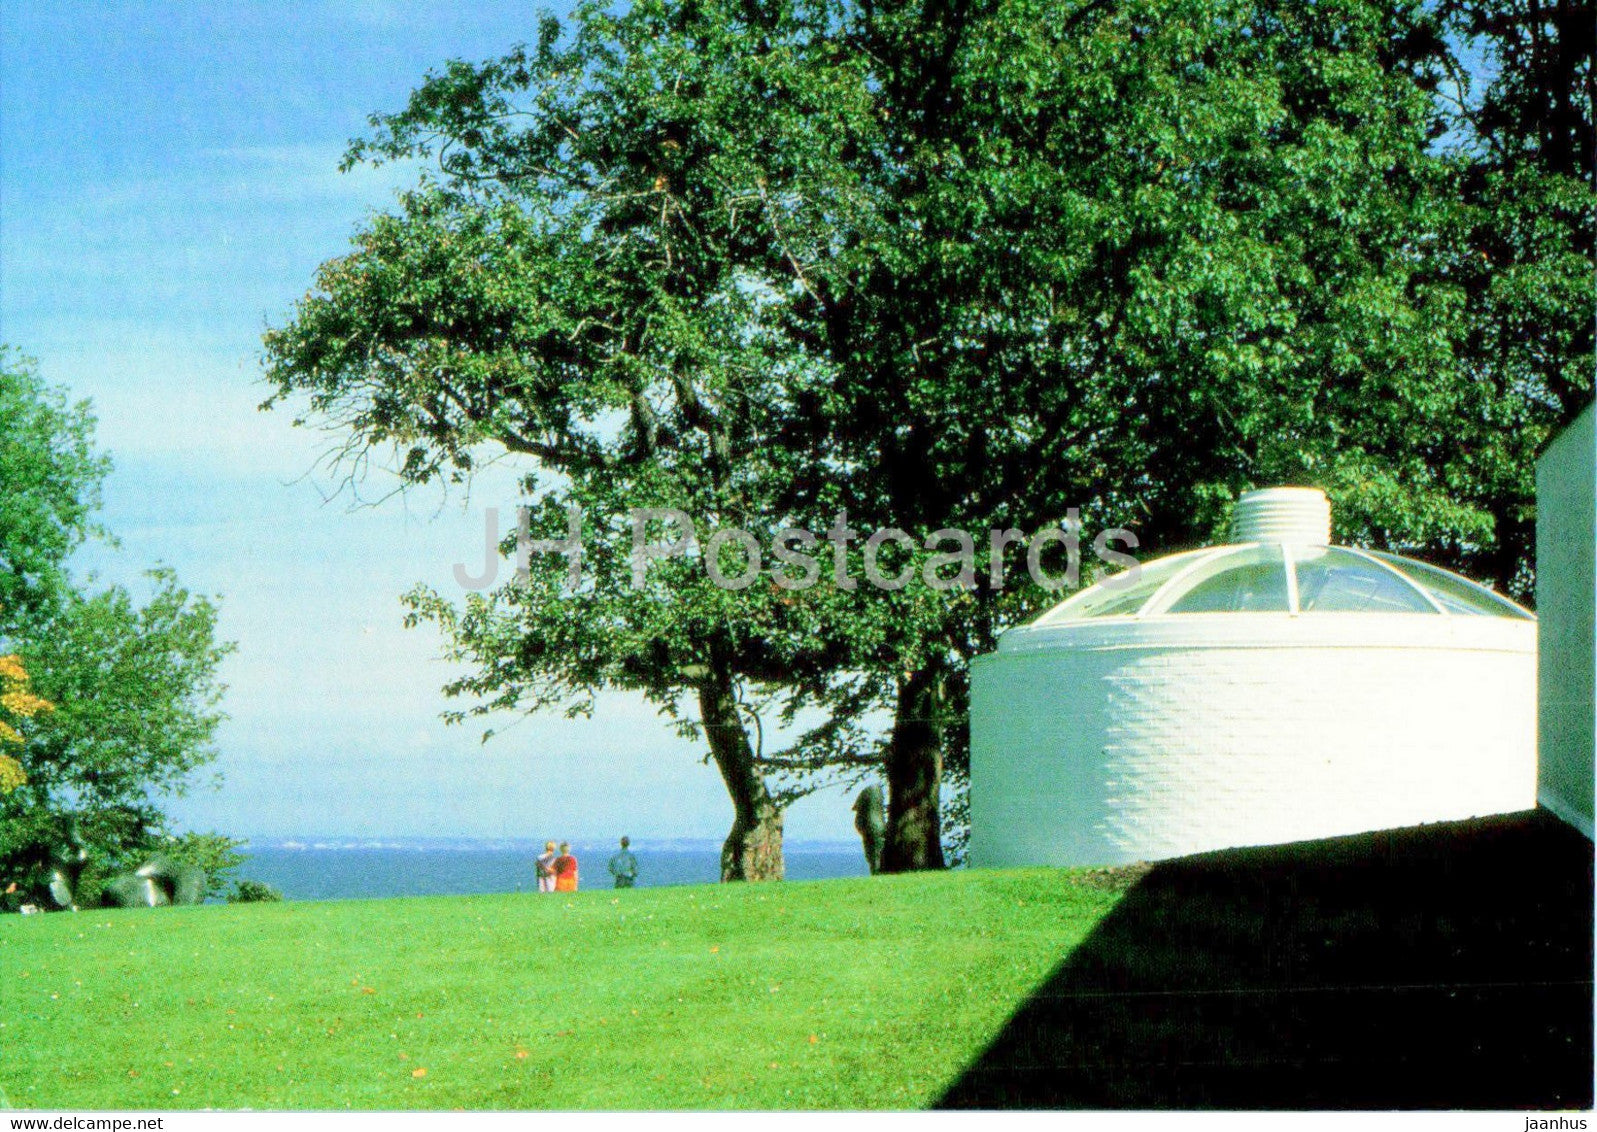 Louisiana Museum of Modern Art - The Greenhouse - Denmark - unused - JH Postcards